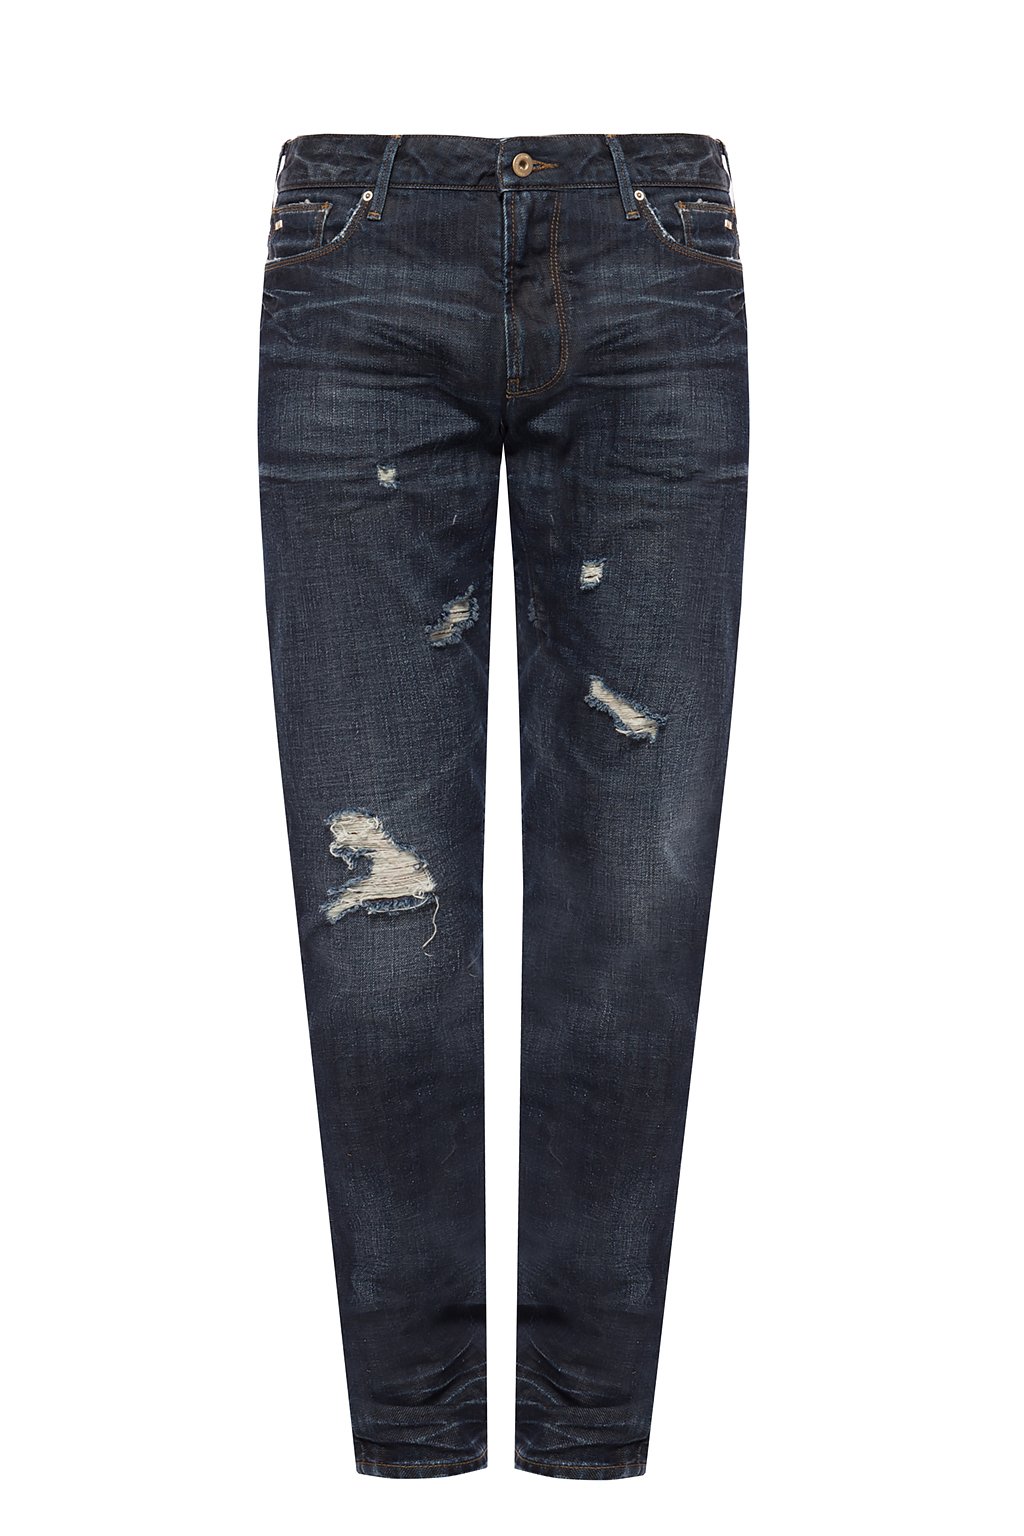 armani distressed jeans